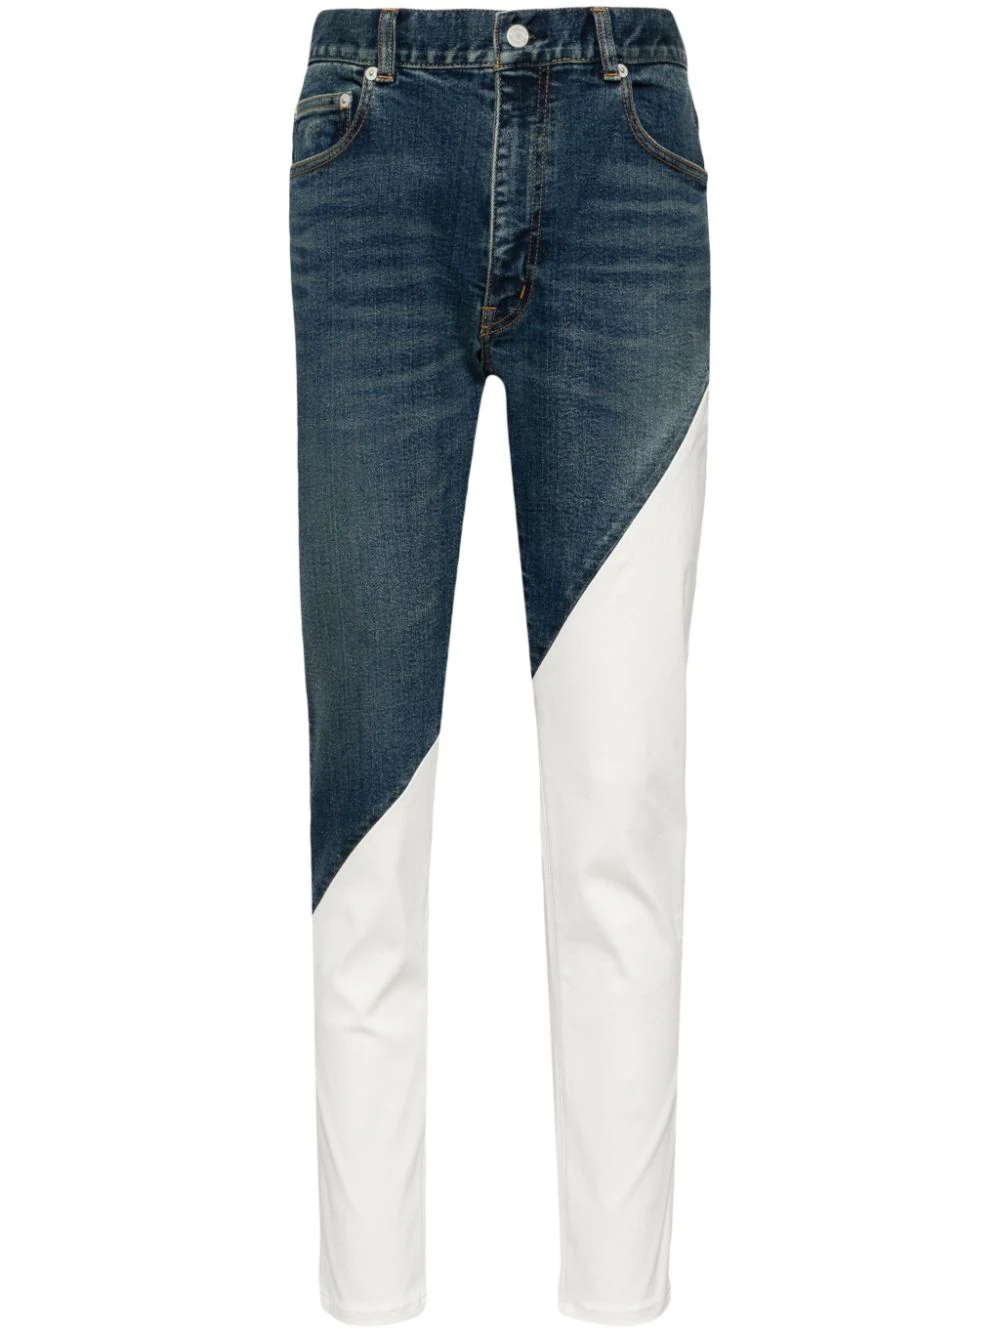 White Panel Skinny Jeans